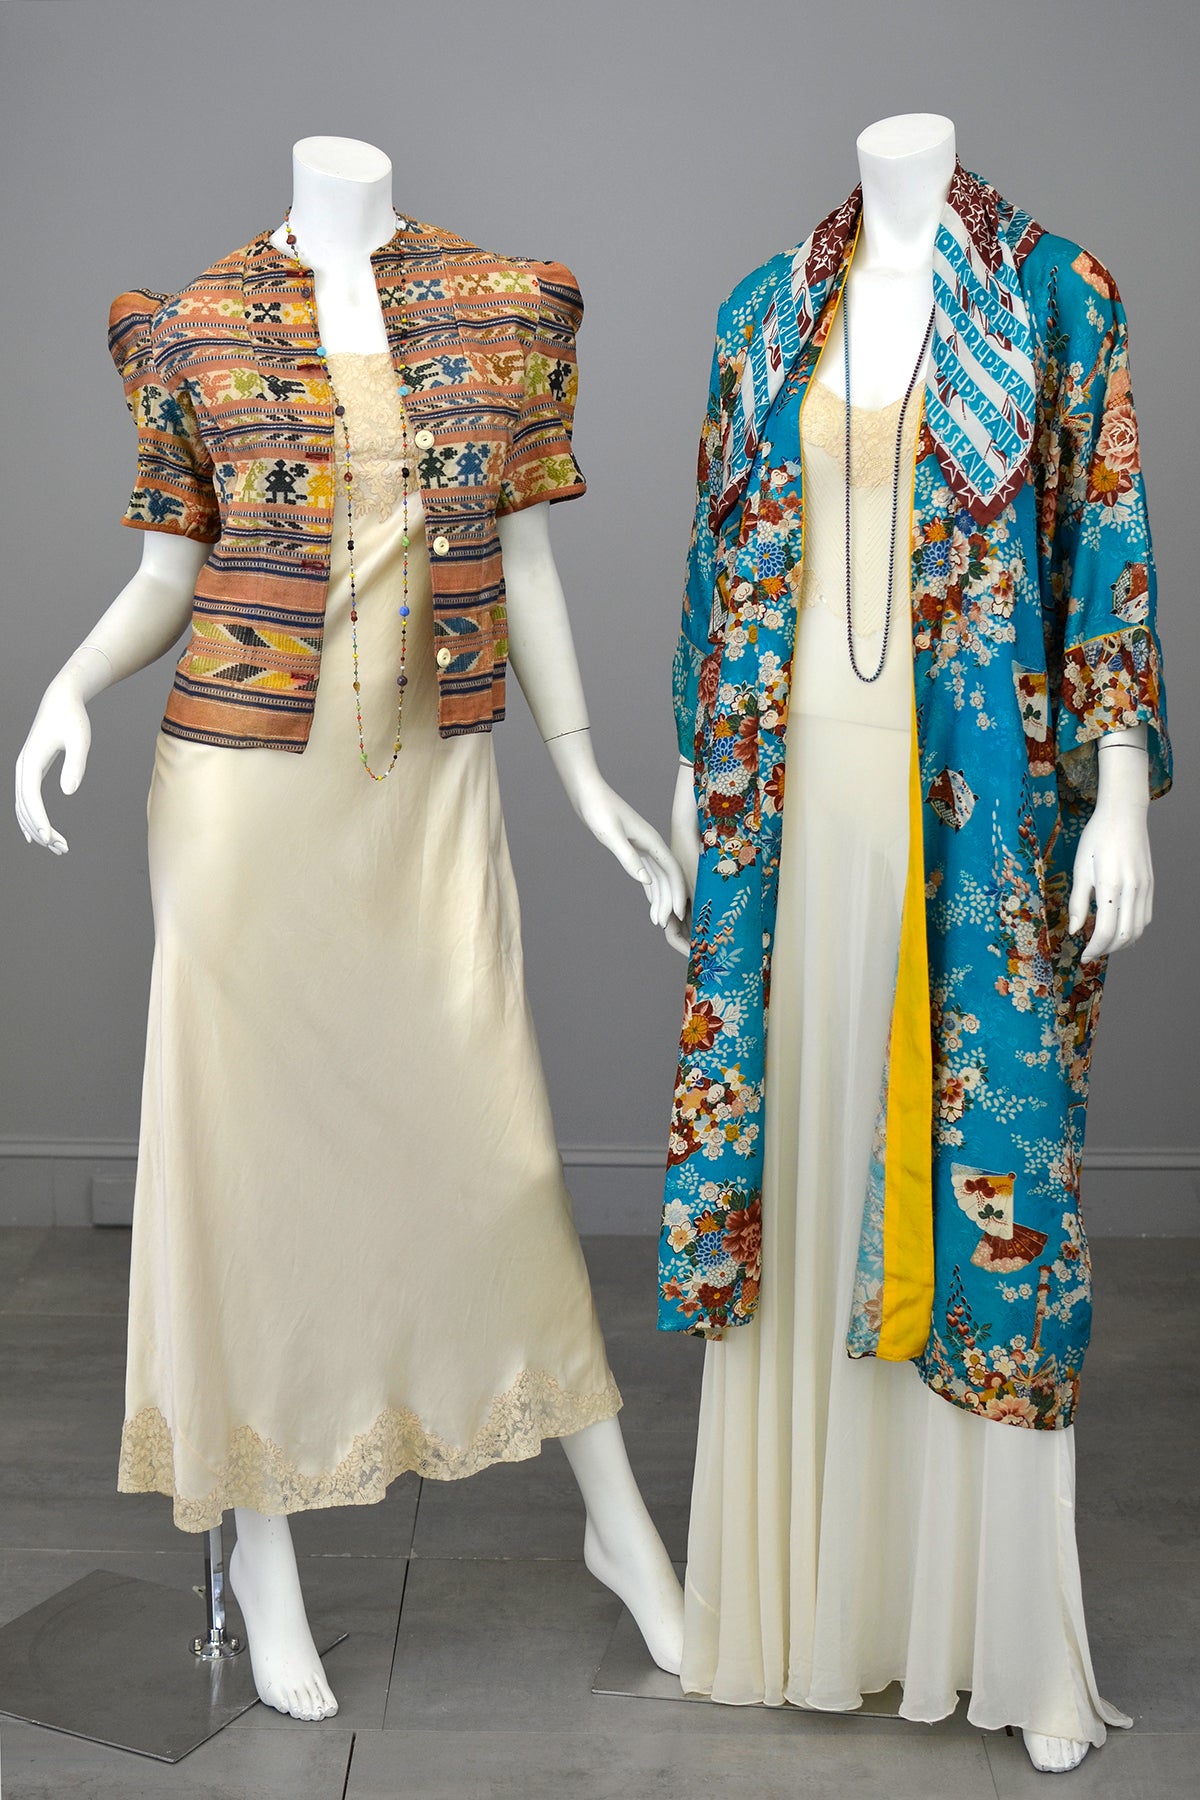 1930s Bias Cut Lace Trim Elegant Hollywood Glam Negligee Gown